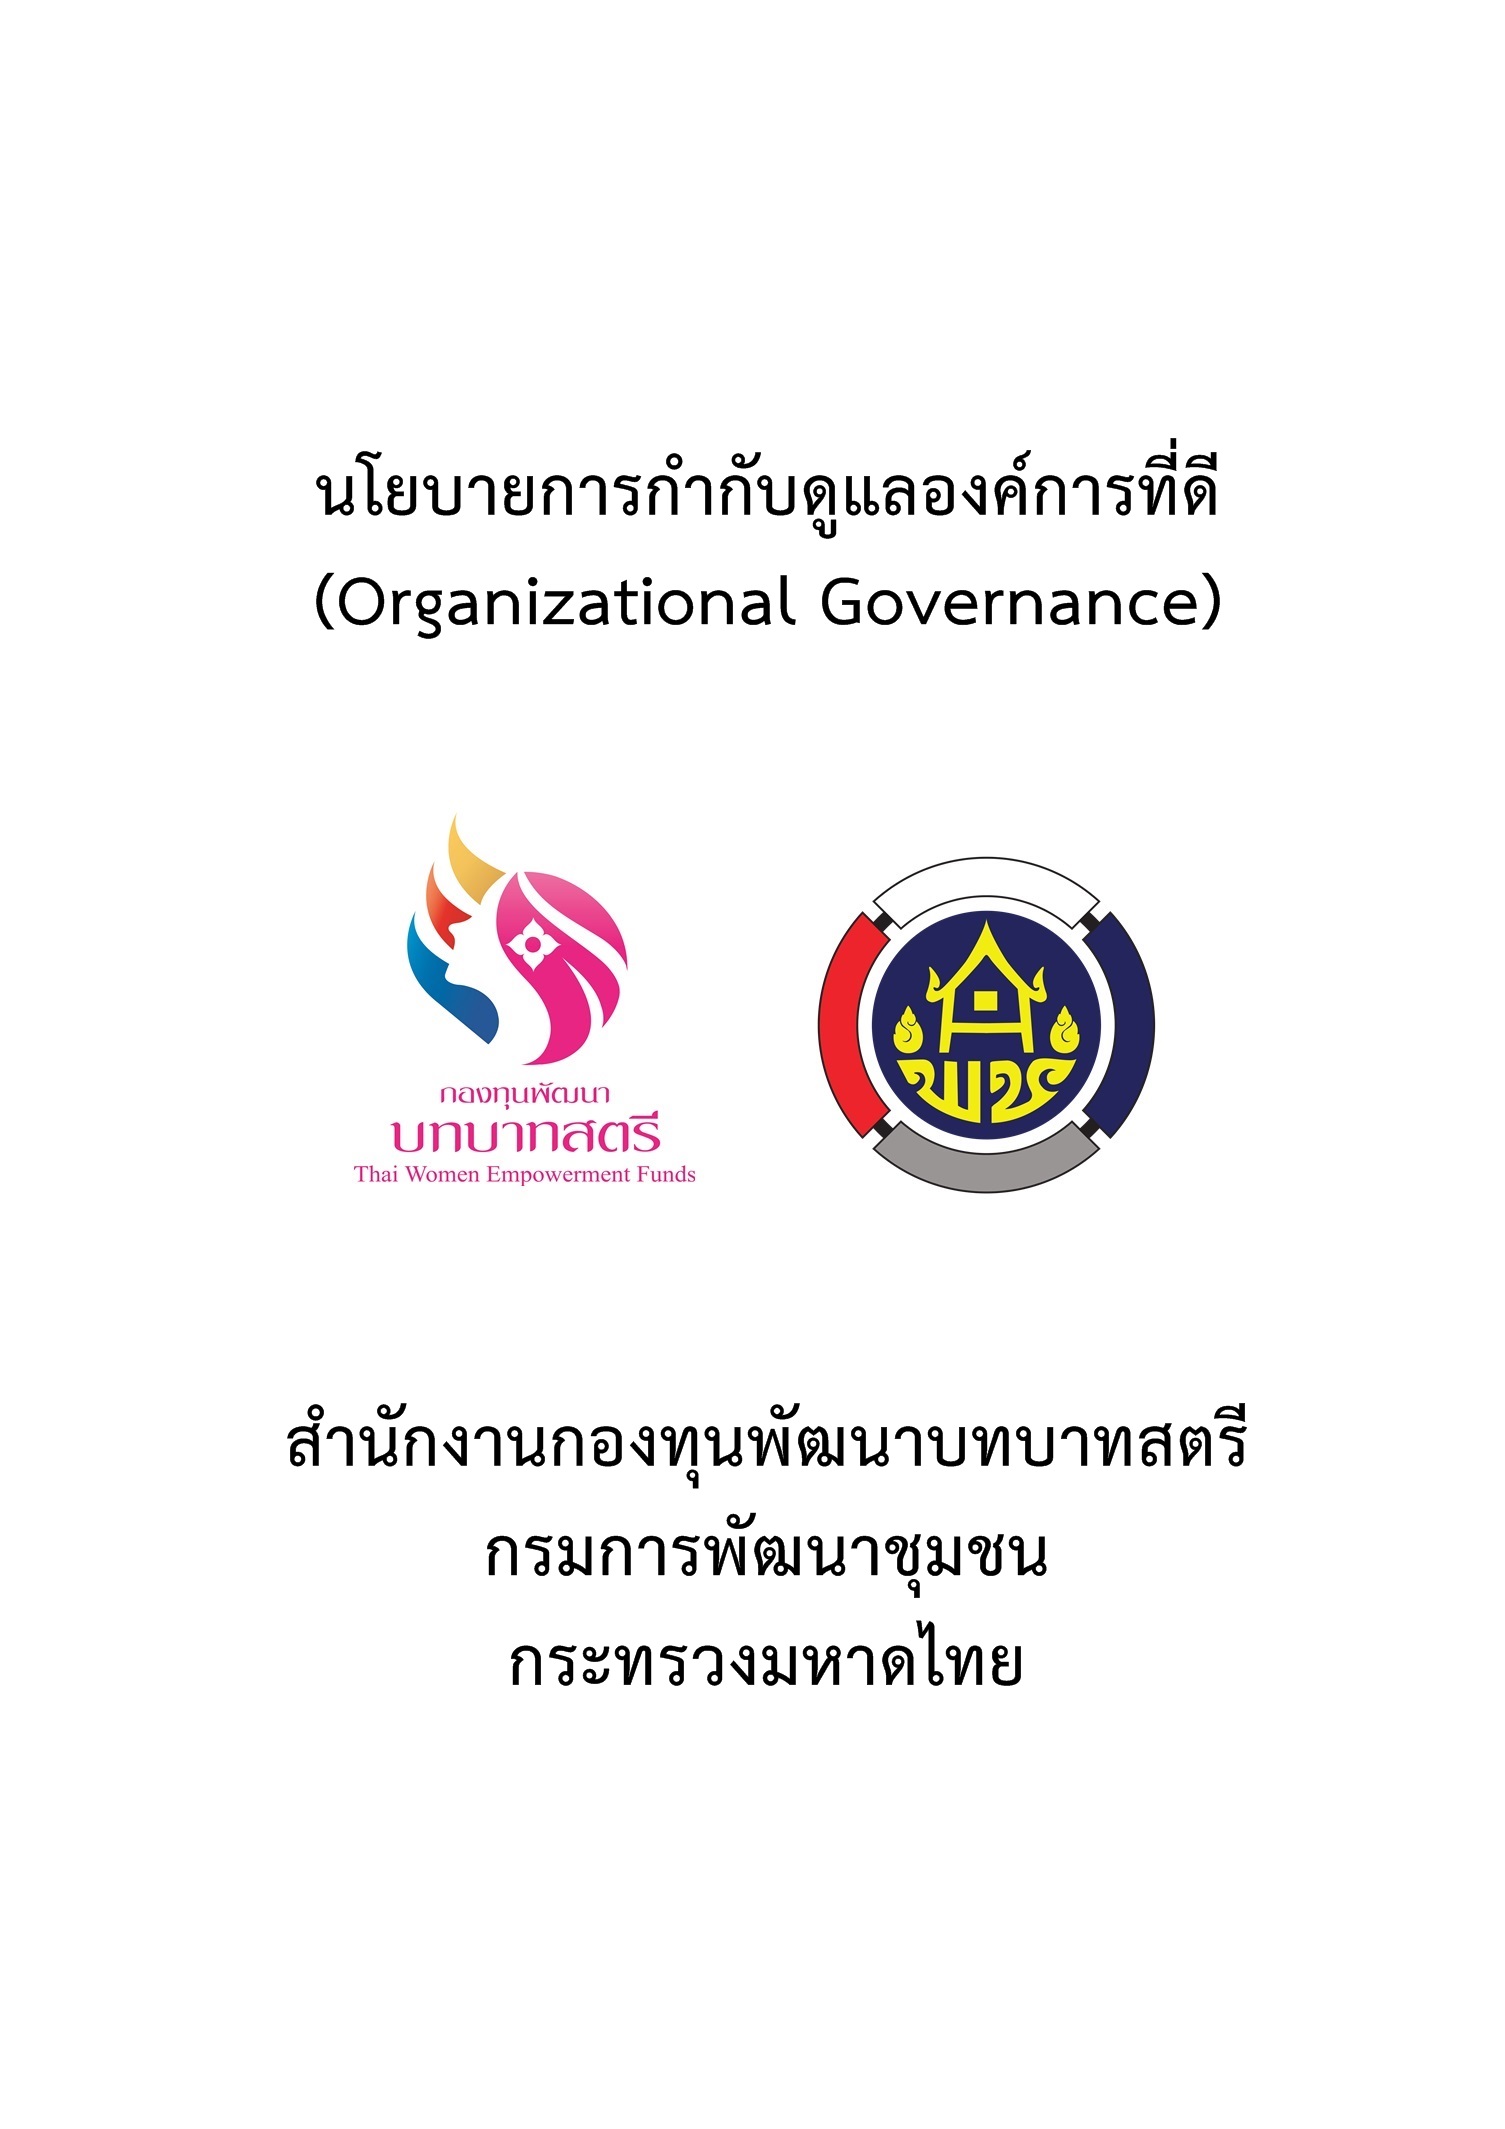 Organizational Governance 61 1